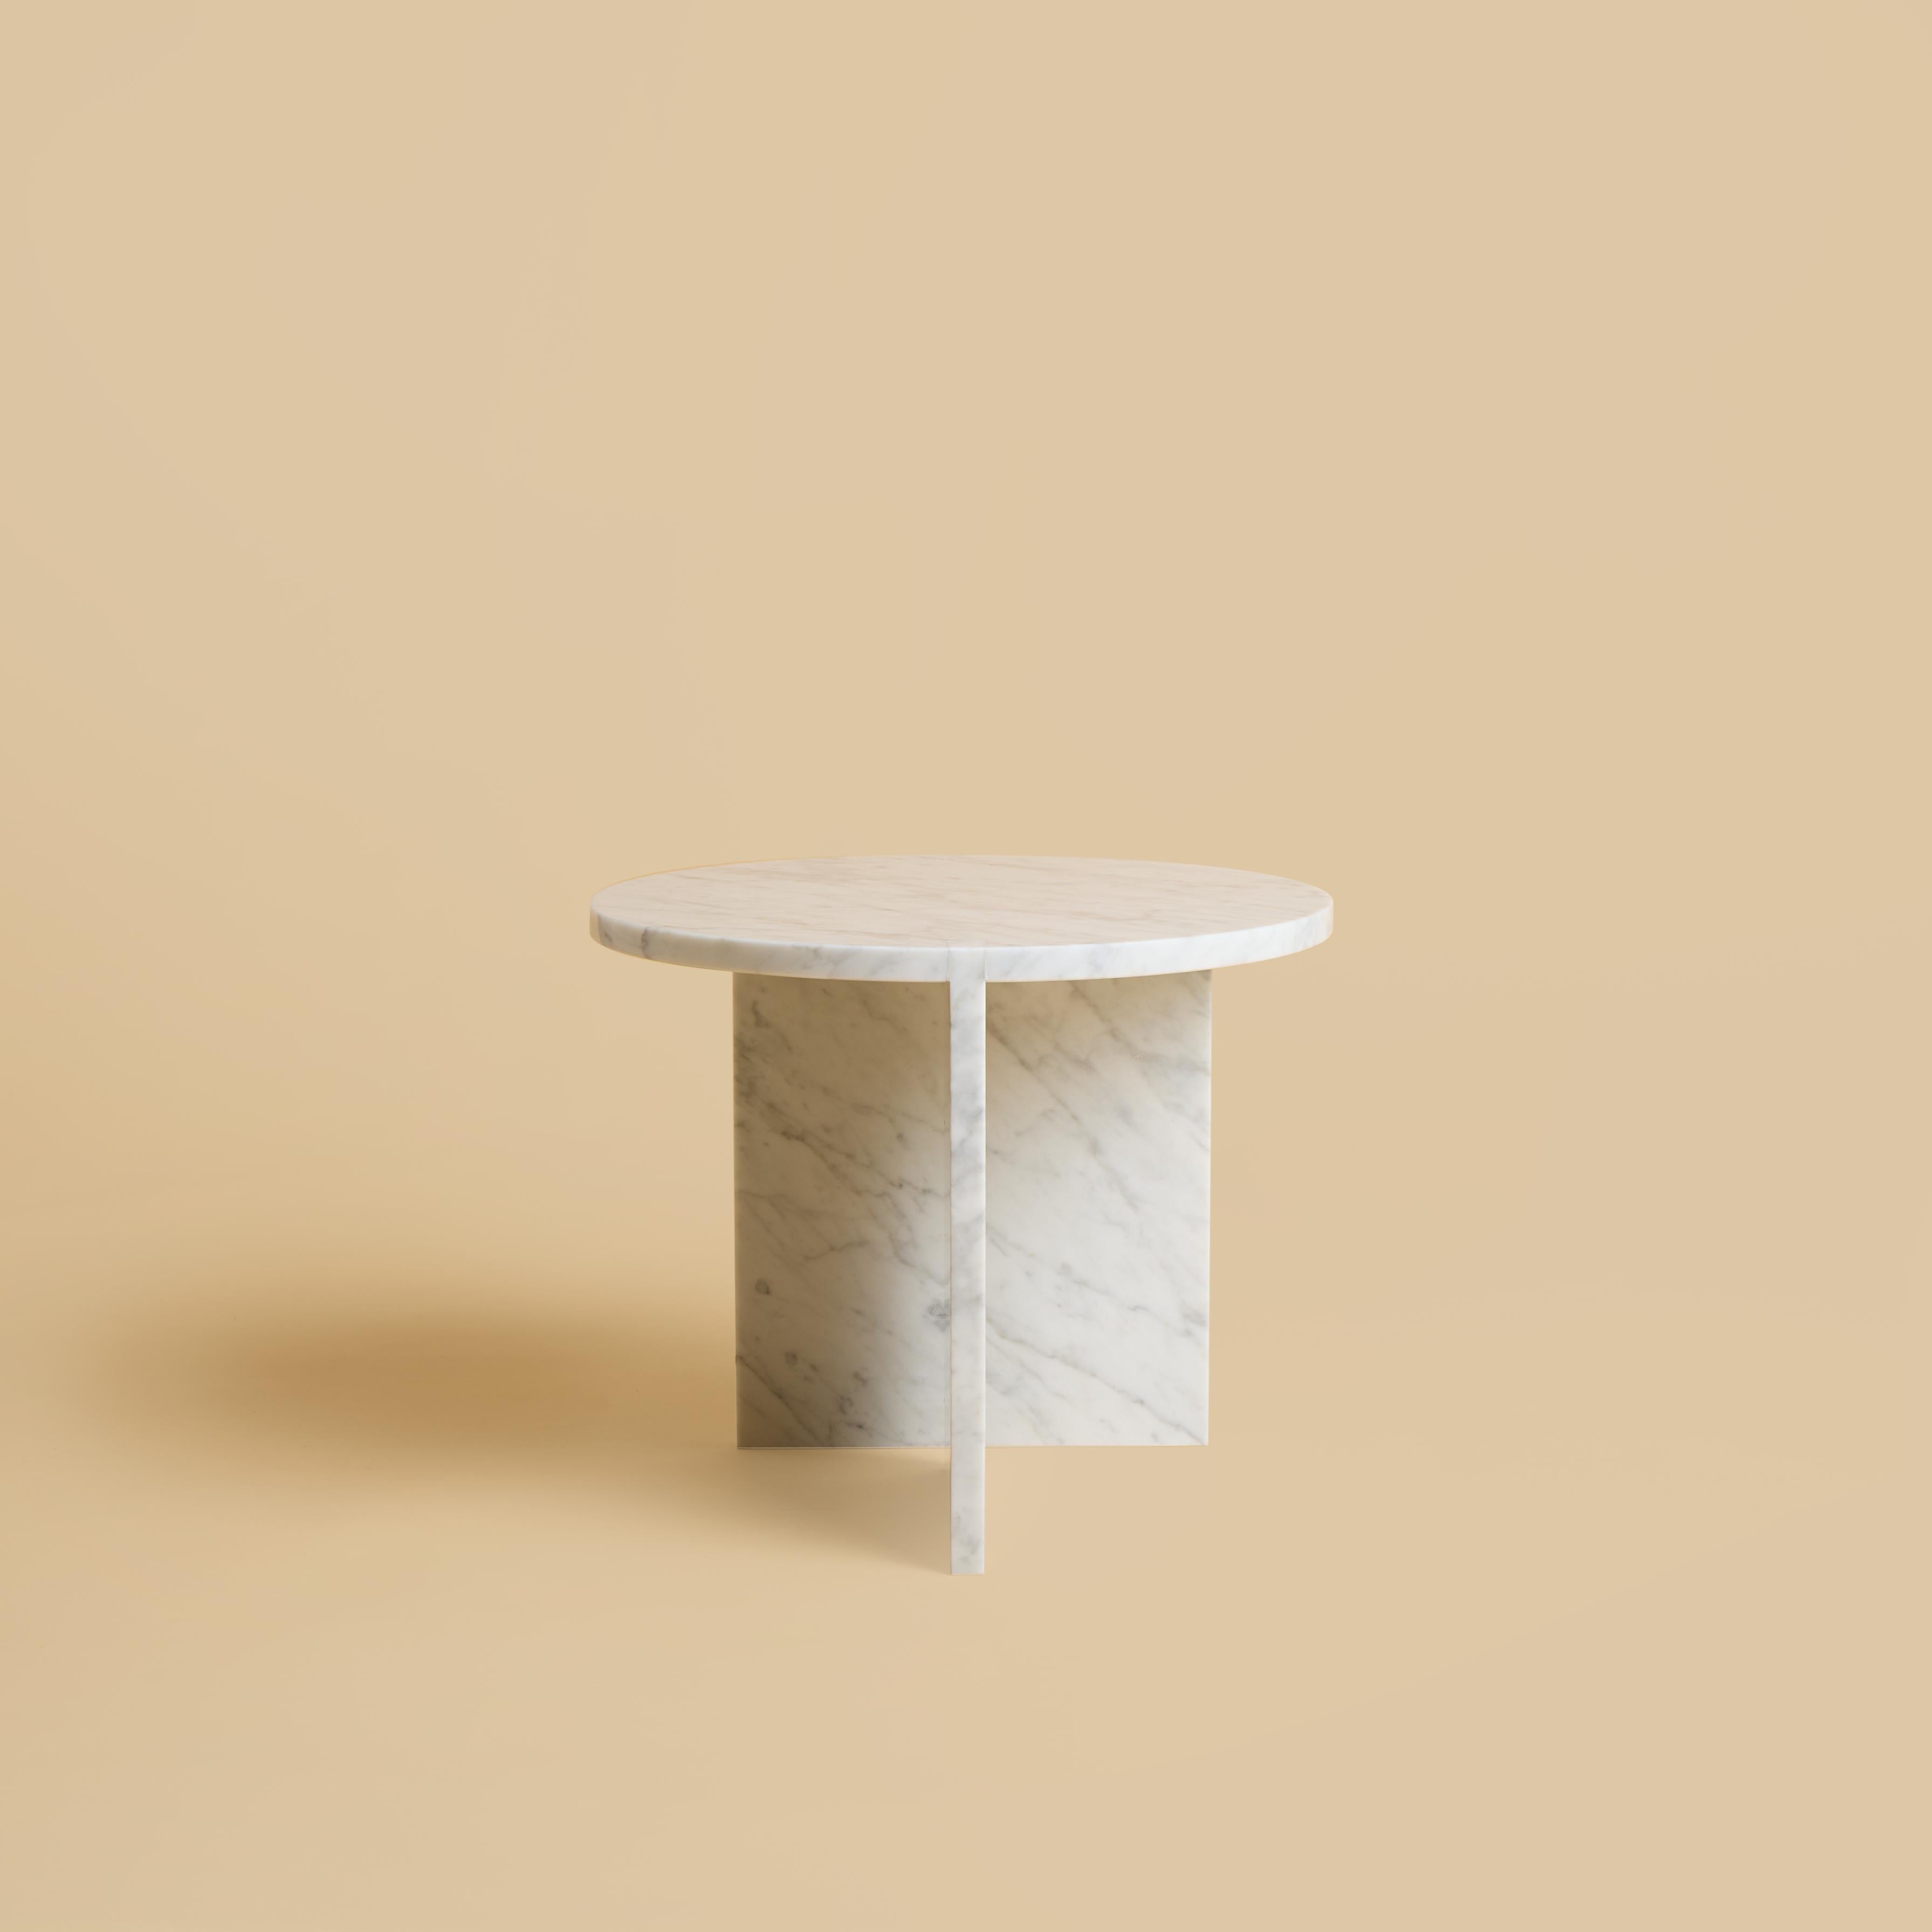 italien Table basse circulaire en marbre de Carrare, fabriquée en Italie en vente